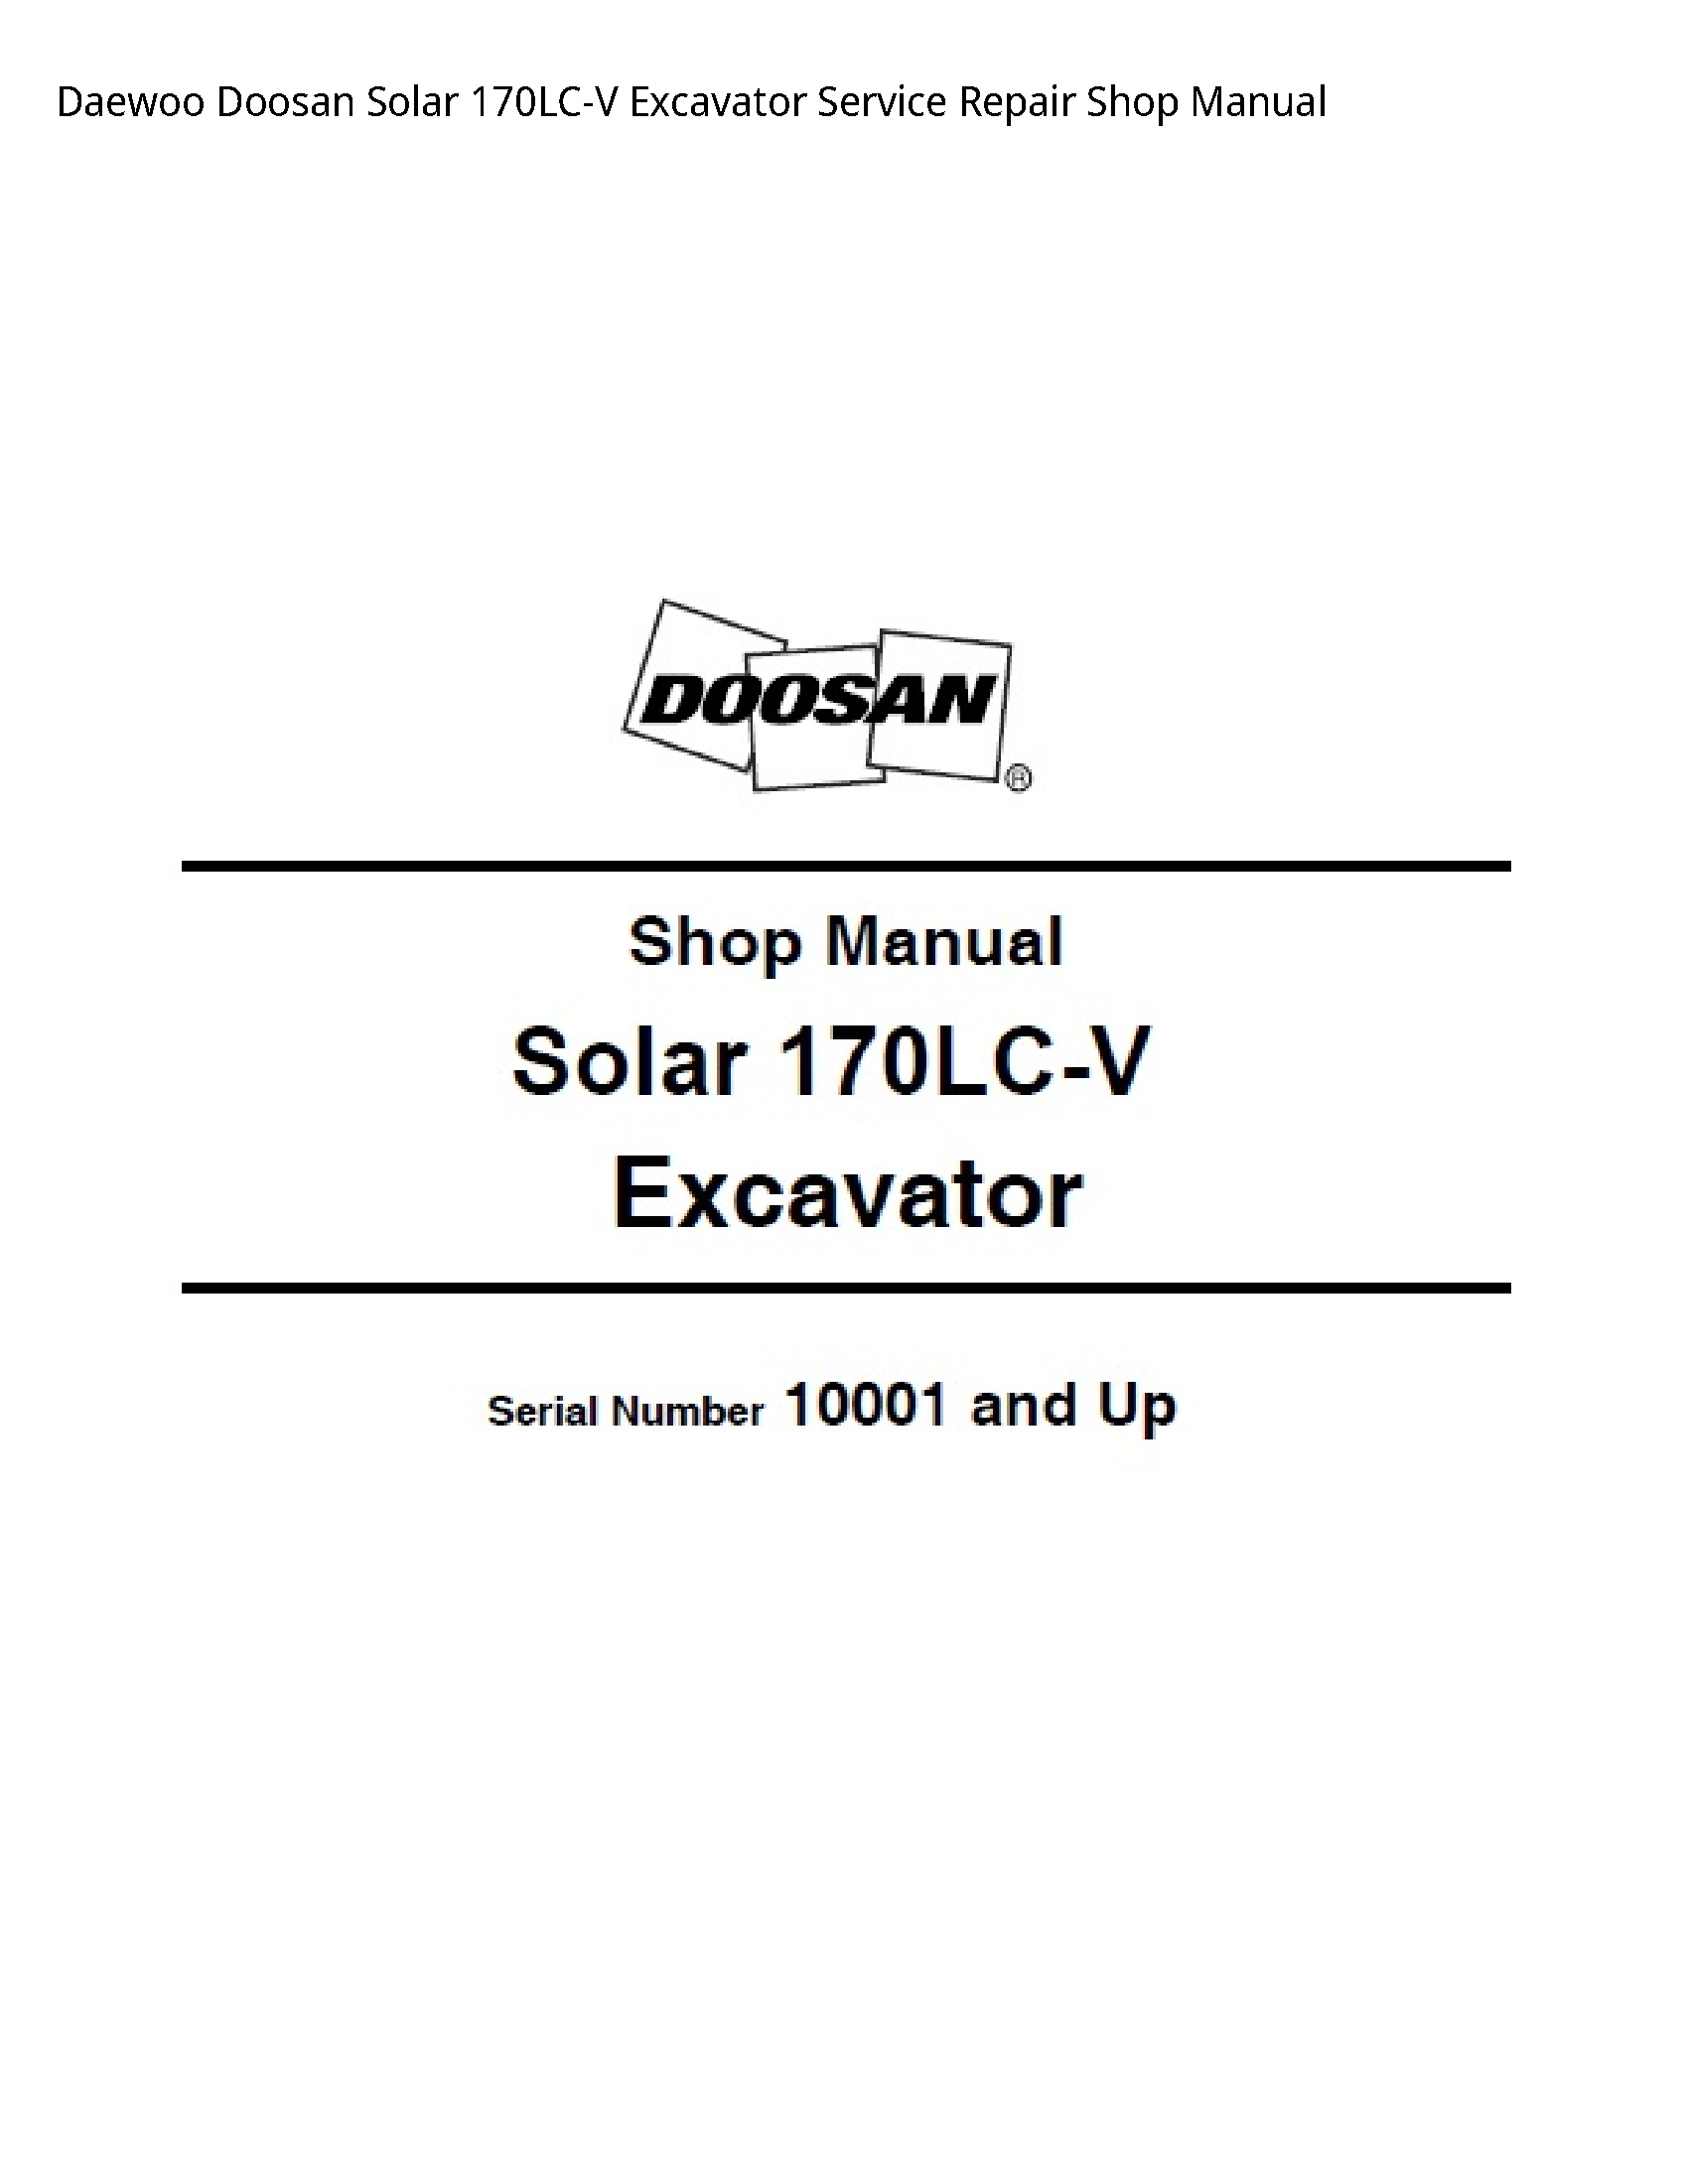 Daewoo Doosan 170LC-V Solar Excavator manual